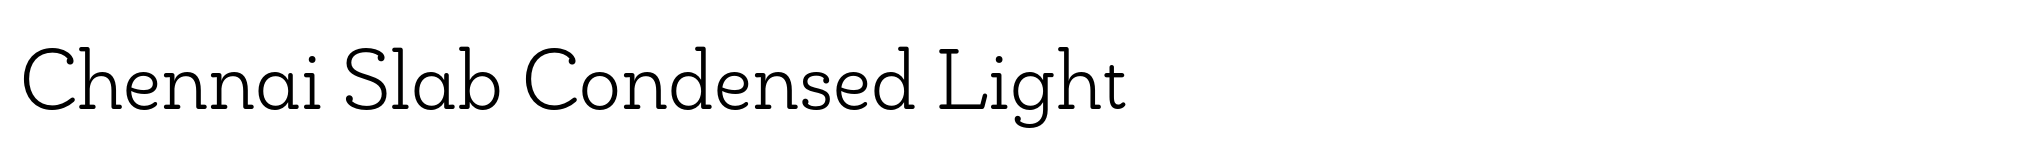 Chennai Slab Condensed Light image